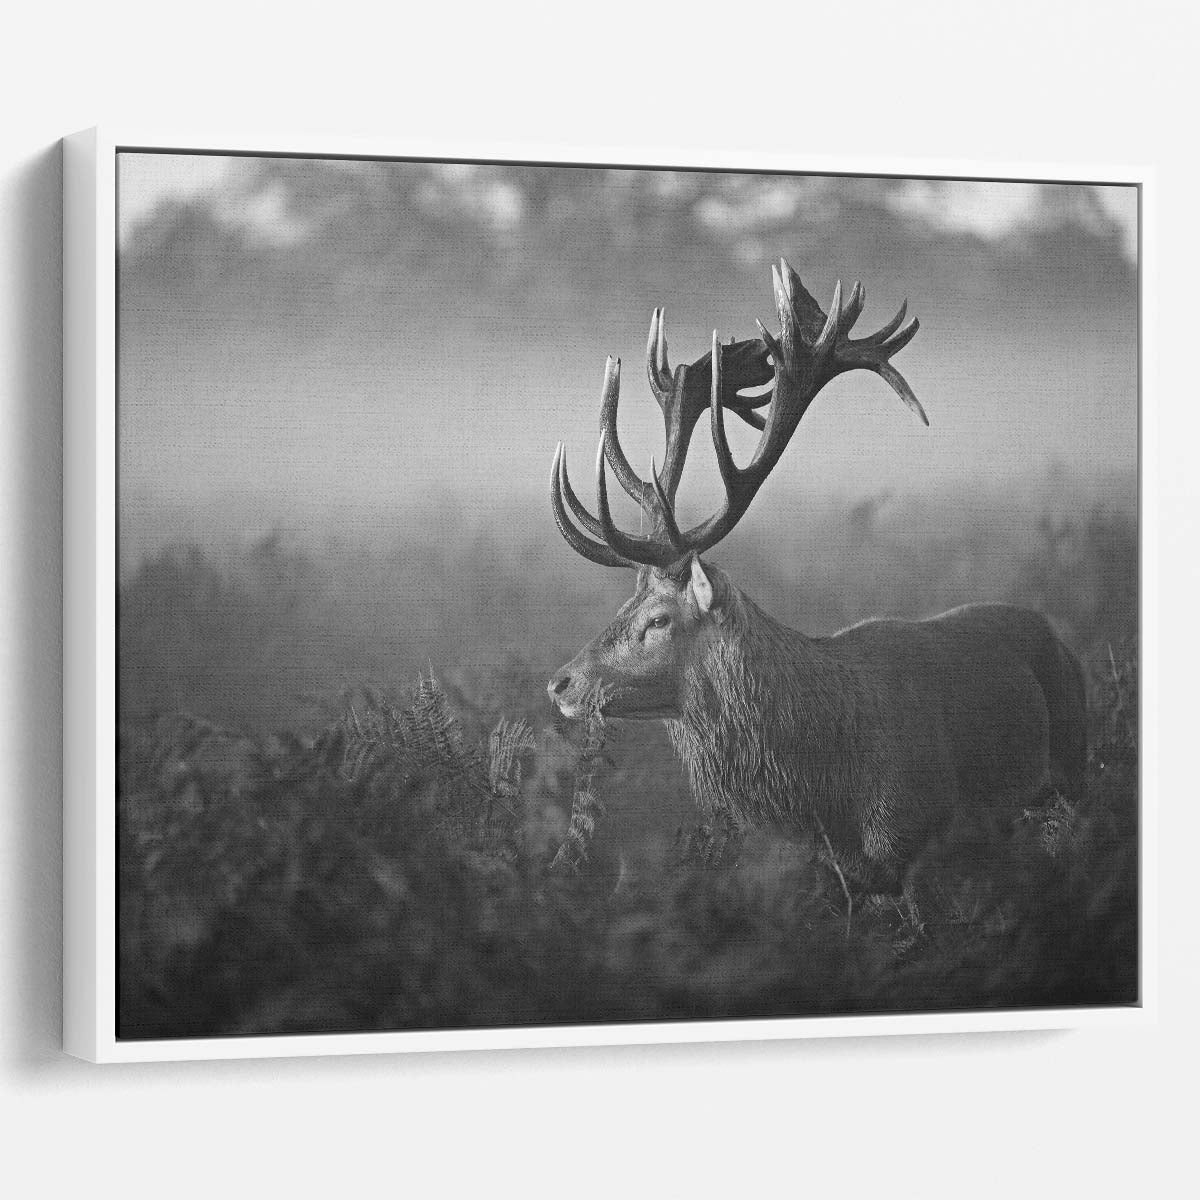 Misty Forest Wildlife Antler Monochrome Wall Art by Luxuriance Designs. Made in USA.